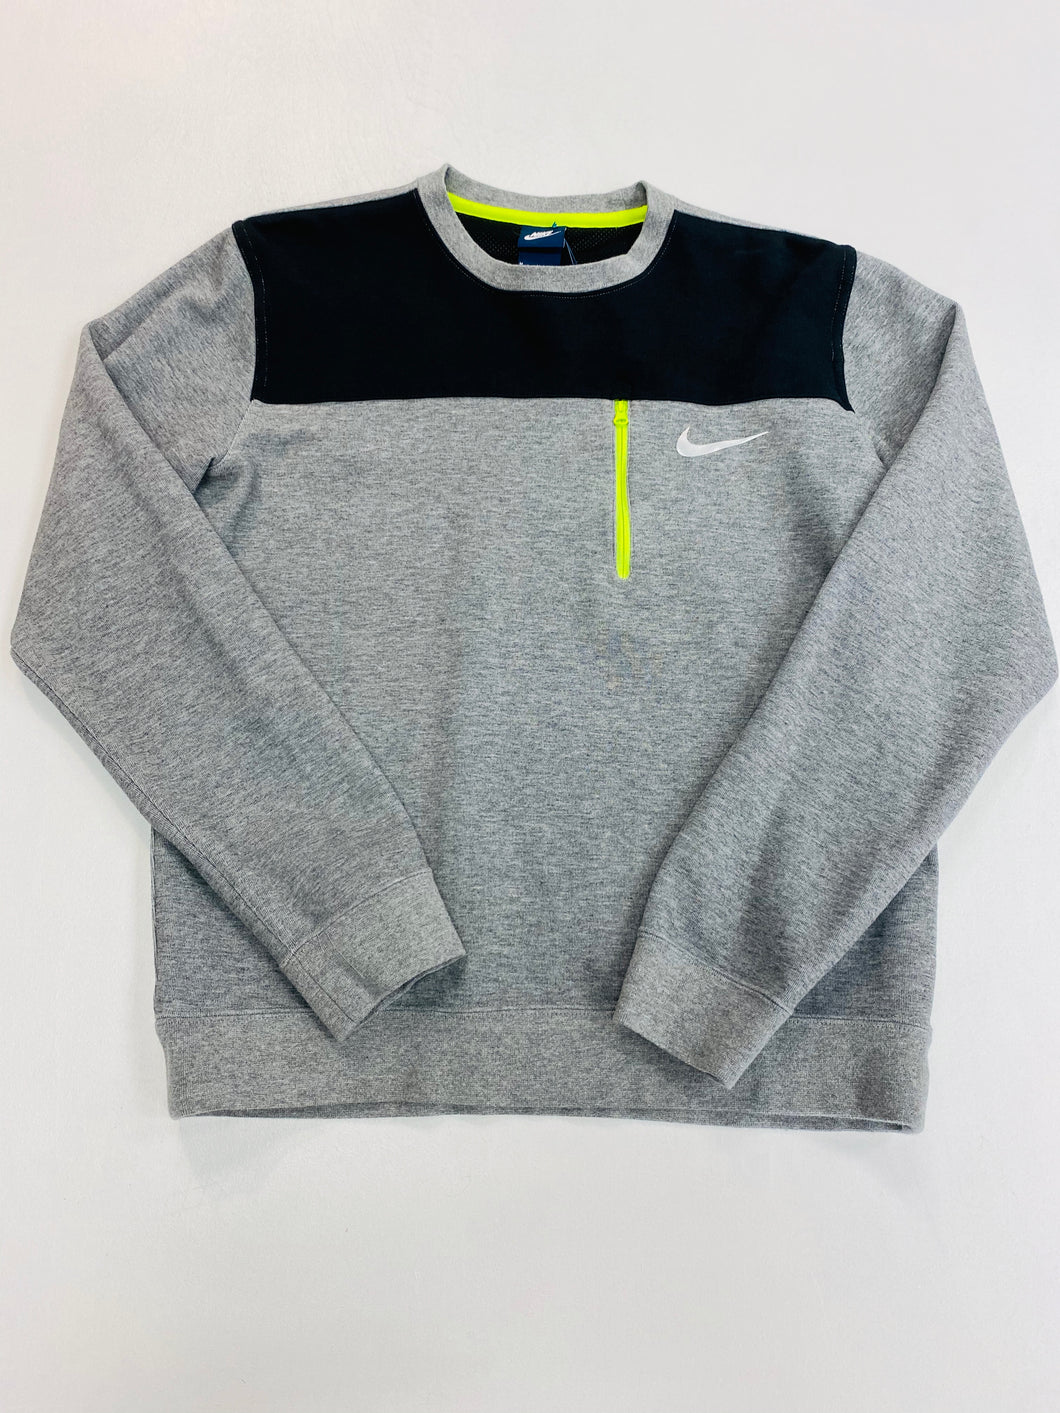 Nike Mens Sweatshirt Size Medium